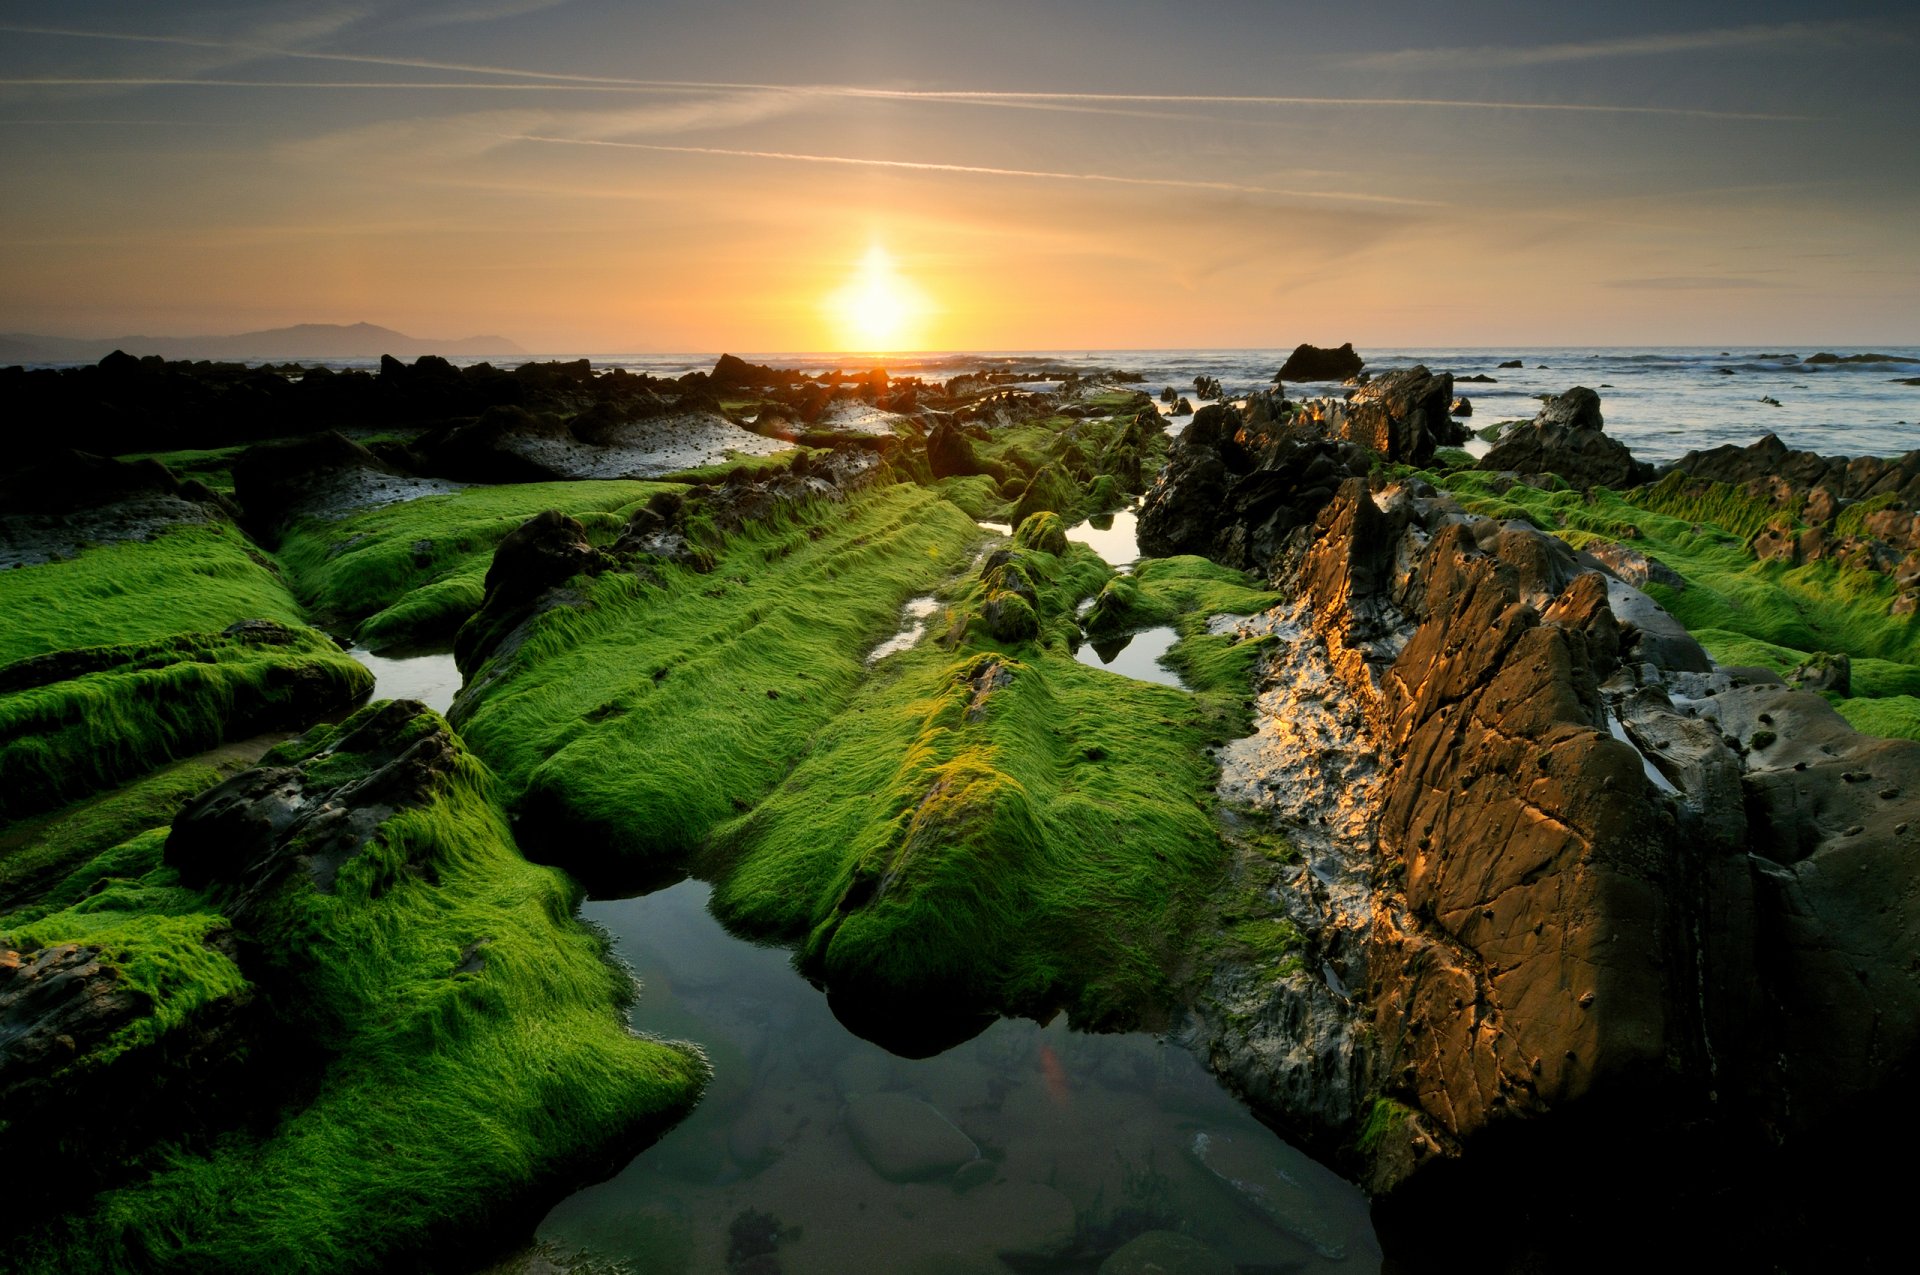 mare rocce rocce verde sole